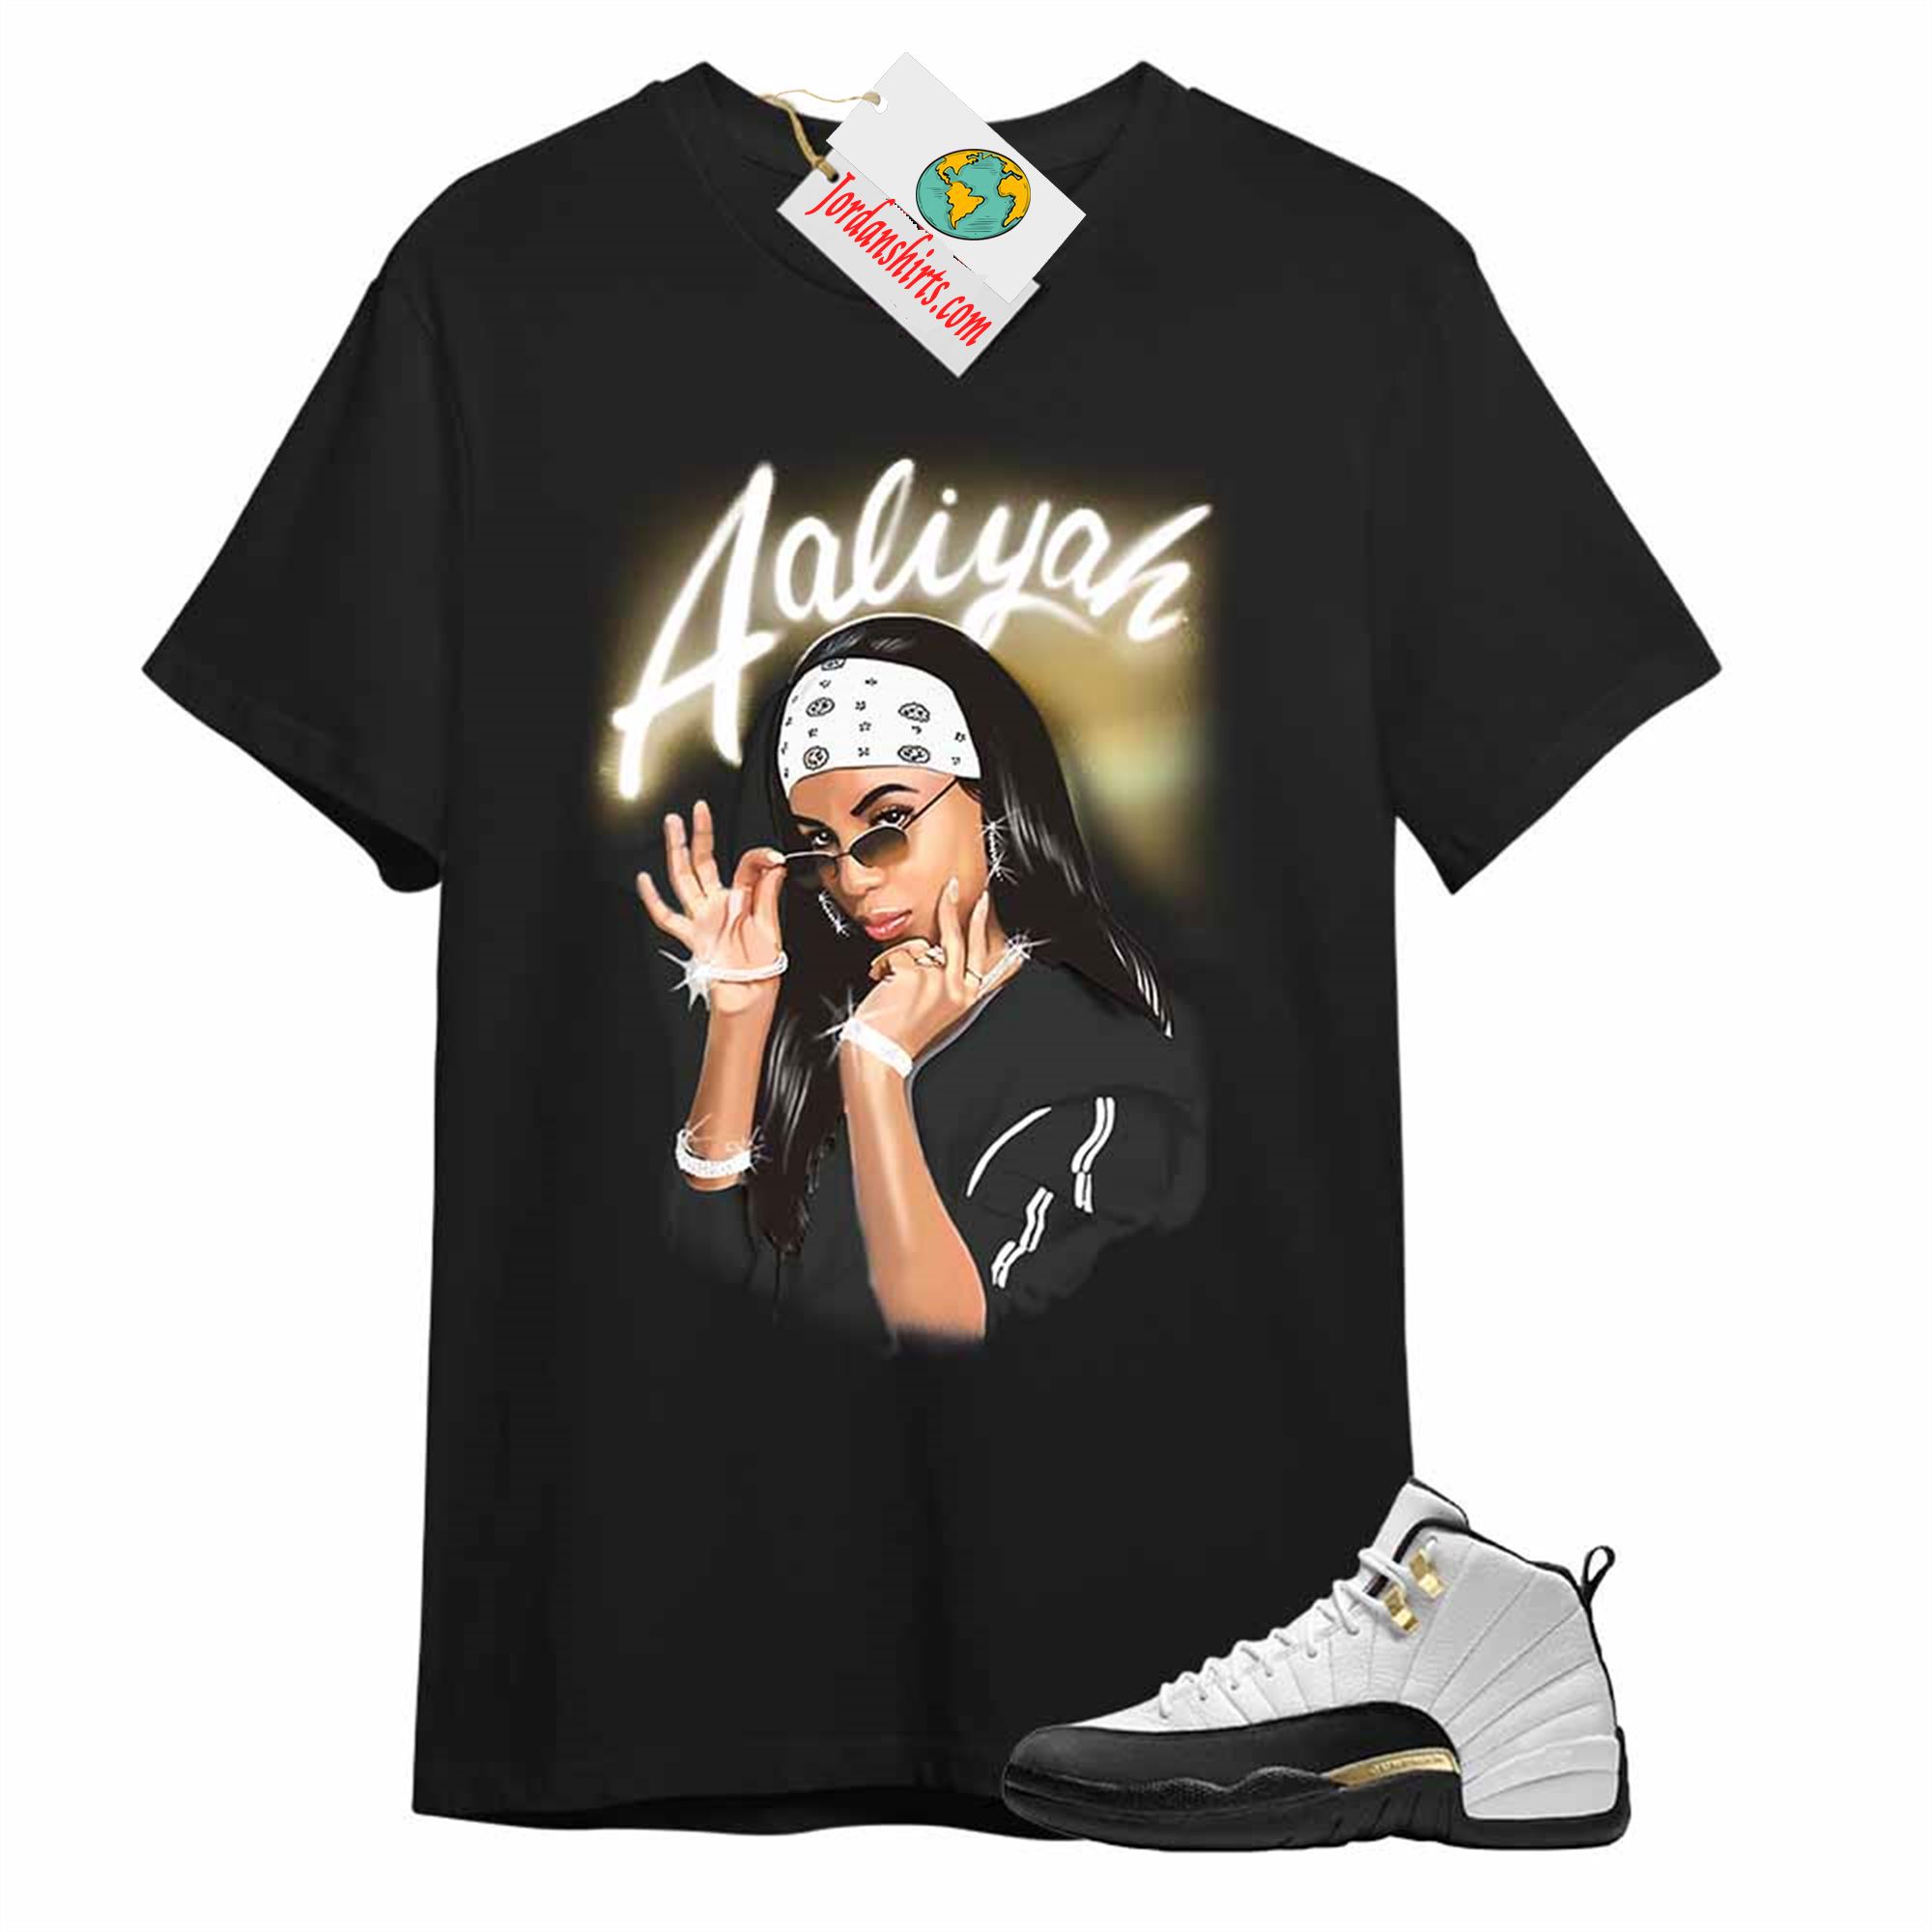 Jordan 12 Shirt, Aaliyah Airbrush Black T-shirt Air Jordan 12 Royalty 12s Full Size Up To 5xl